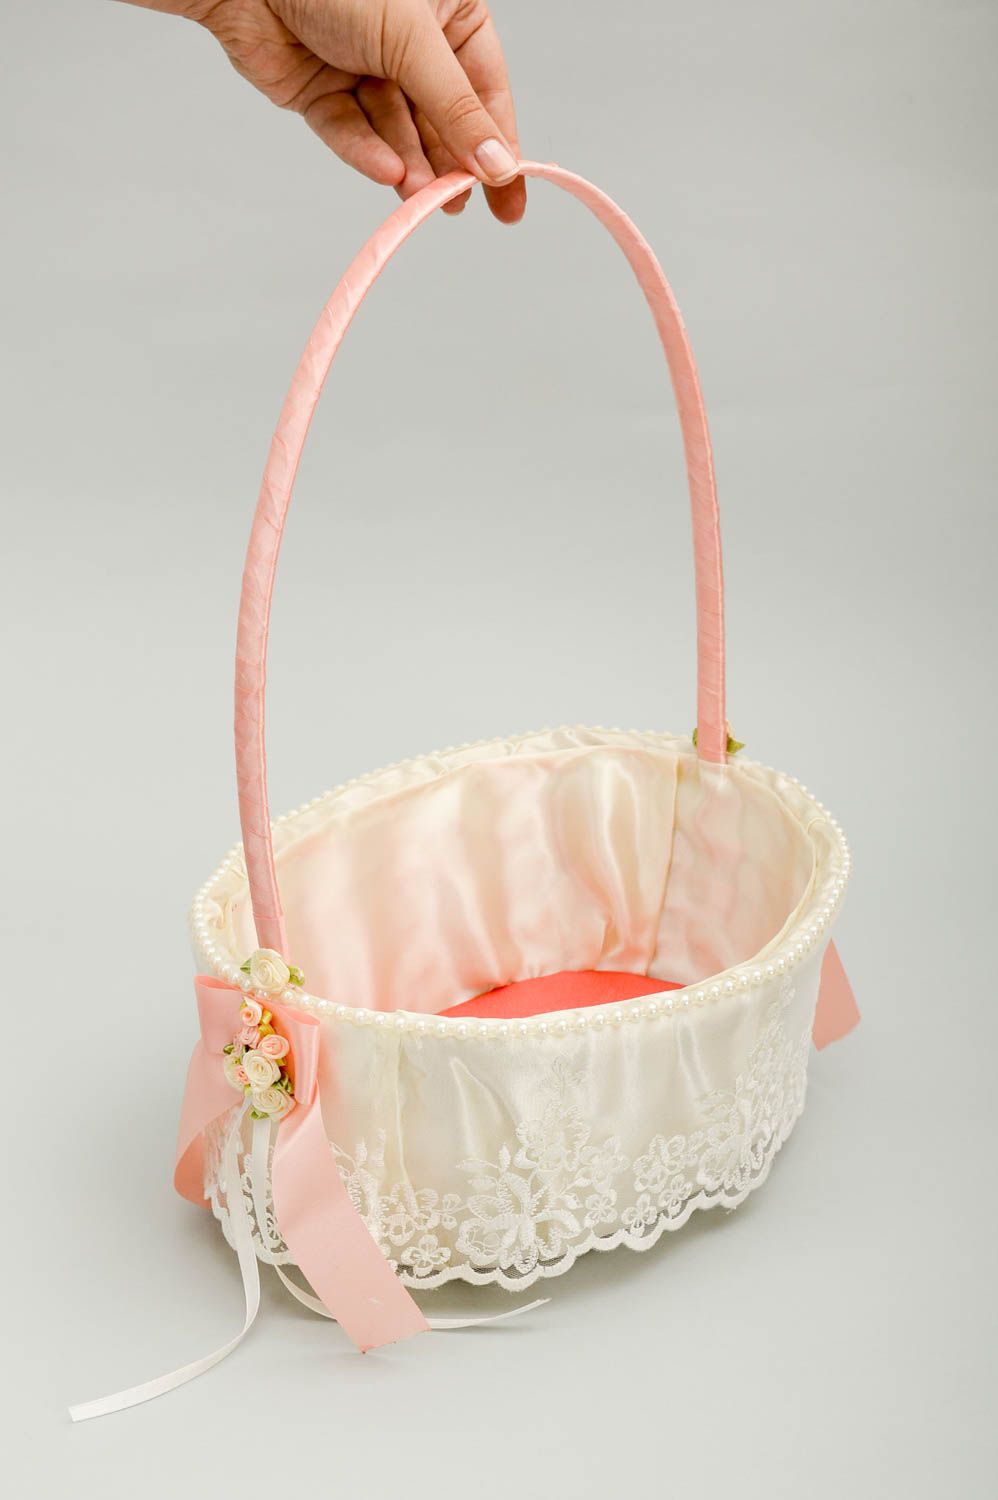 Handmade wedding basket beautiful wedding basket designer wedding accessory photo 5